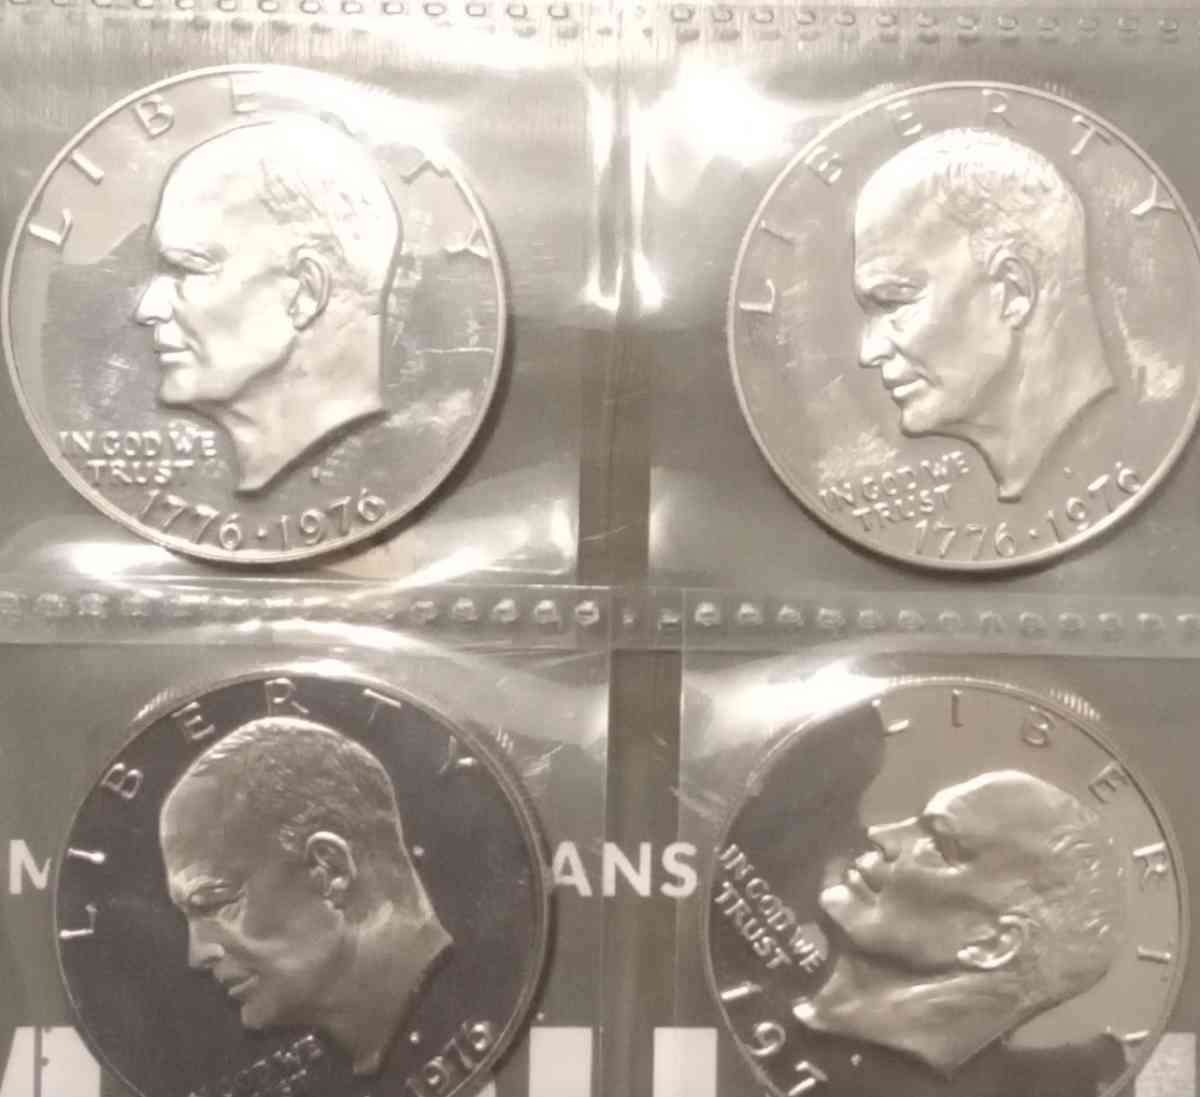 Eisenhower bicentennial dollars